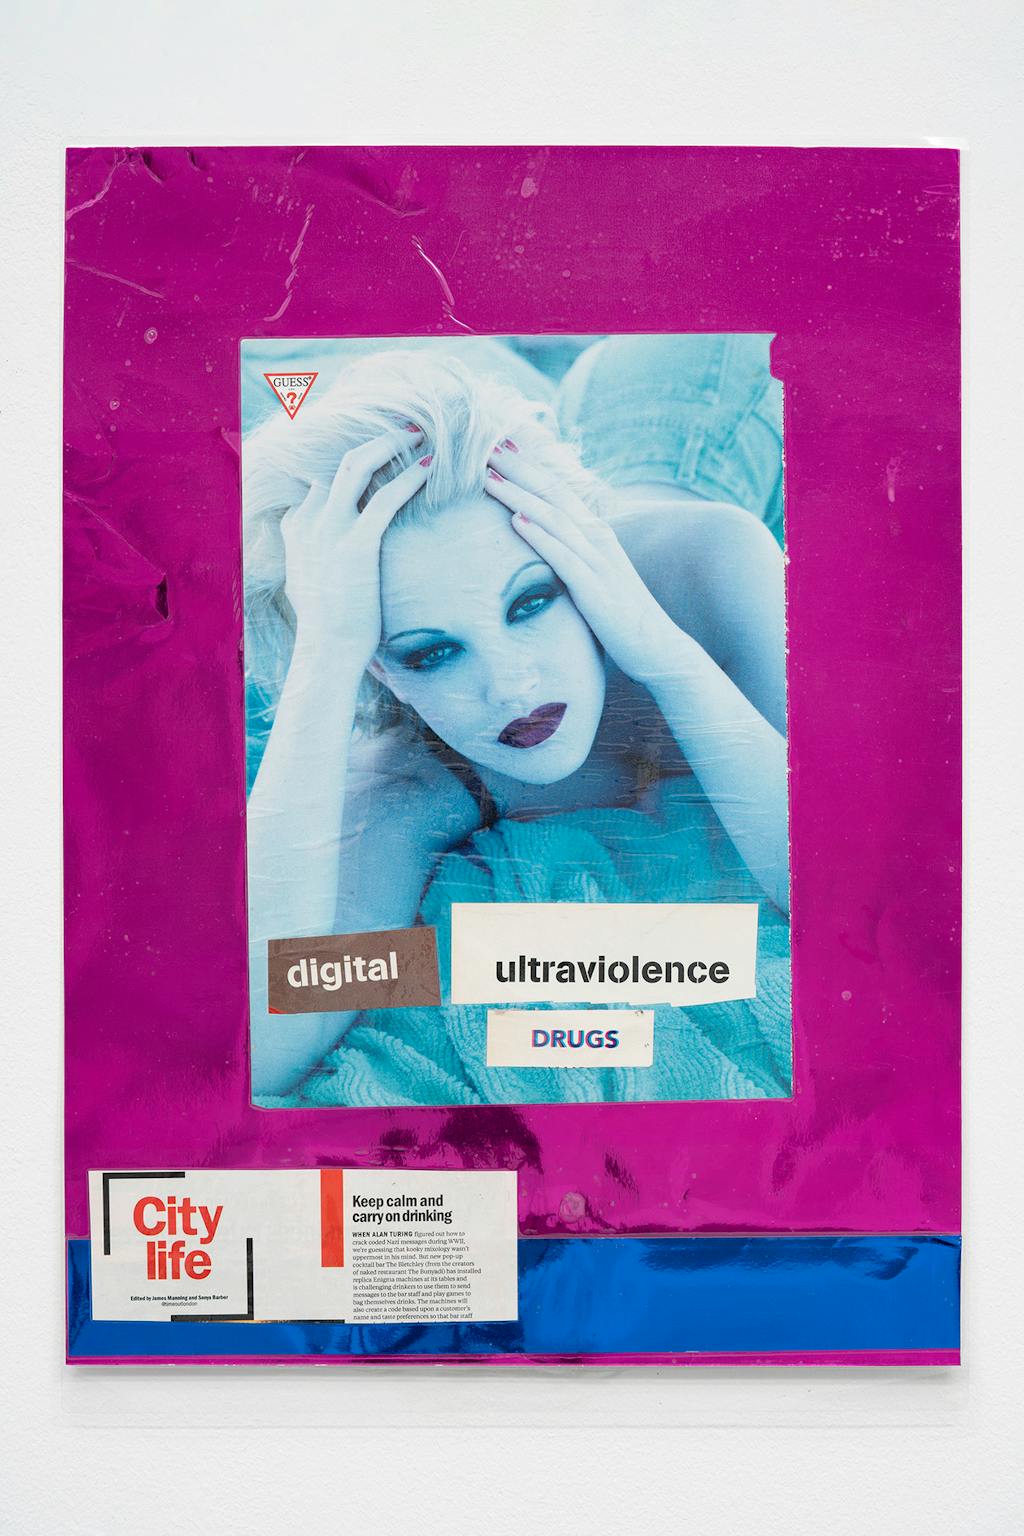 Richard Sides
Untitled (Drew Barrymore digital ultraviolence DRUGS City life Keep calm...), 2018
laminated mixed media
60 × 42,5 cm - © Paris Internationale